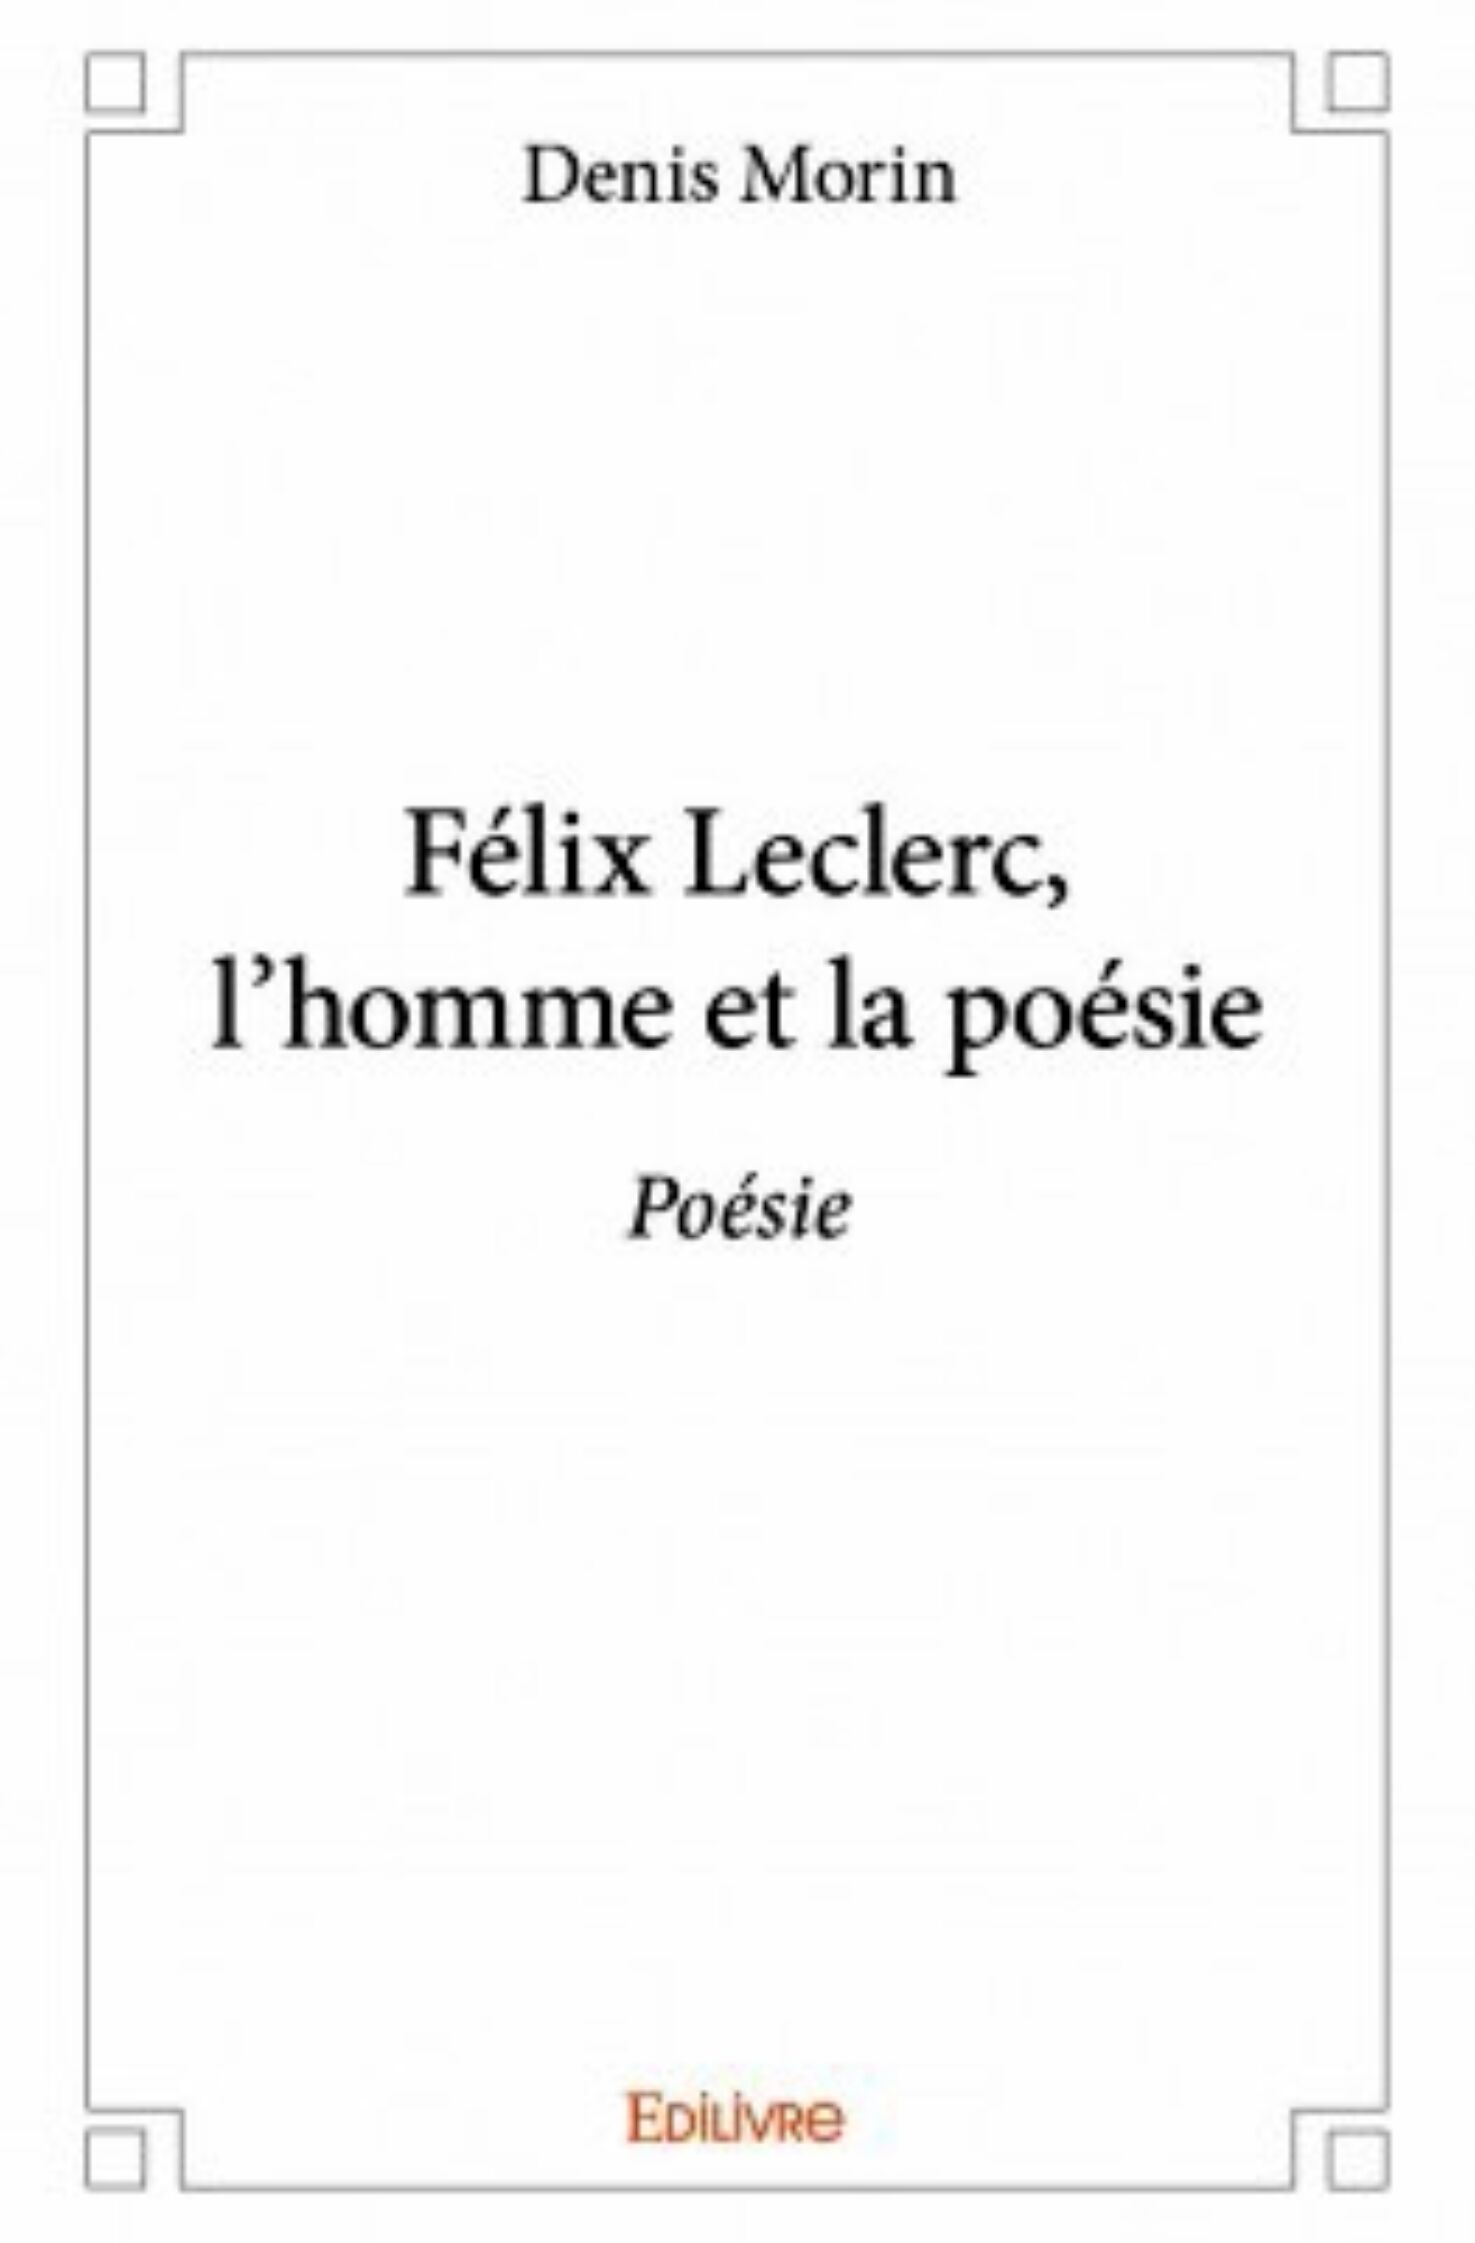 Denis Morin/Félix Leclerc